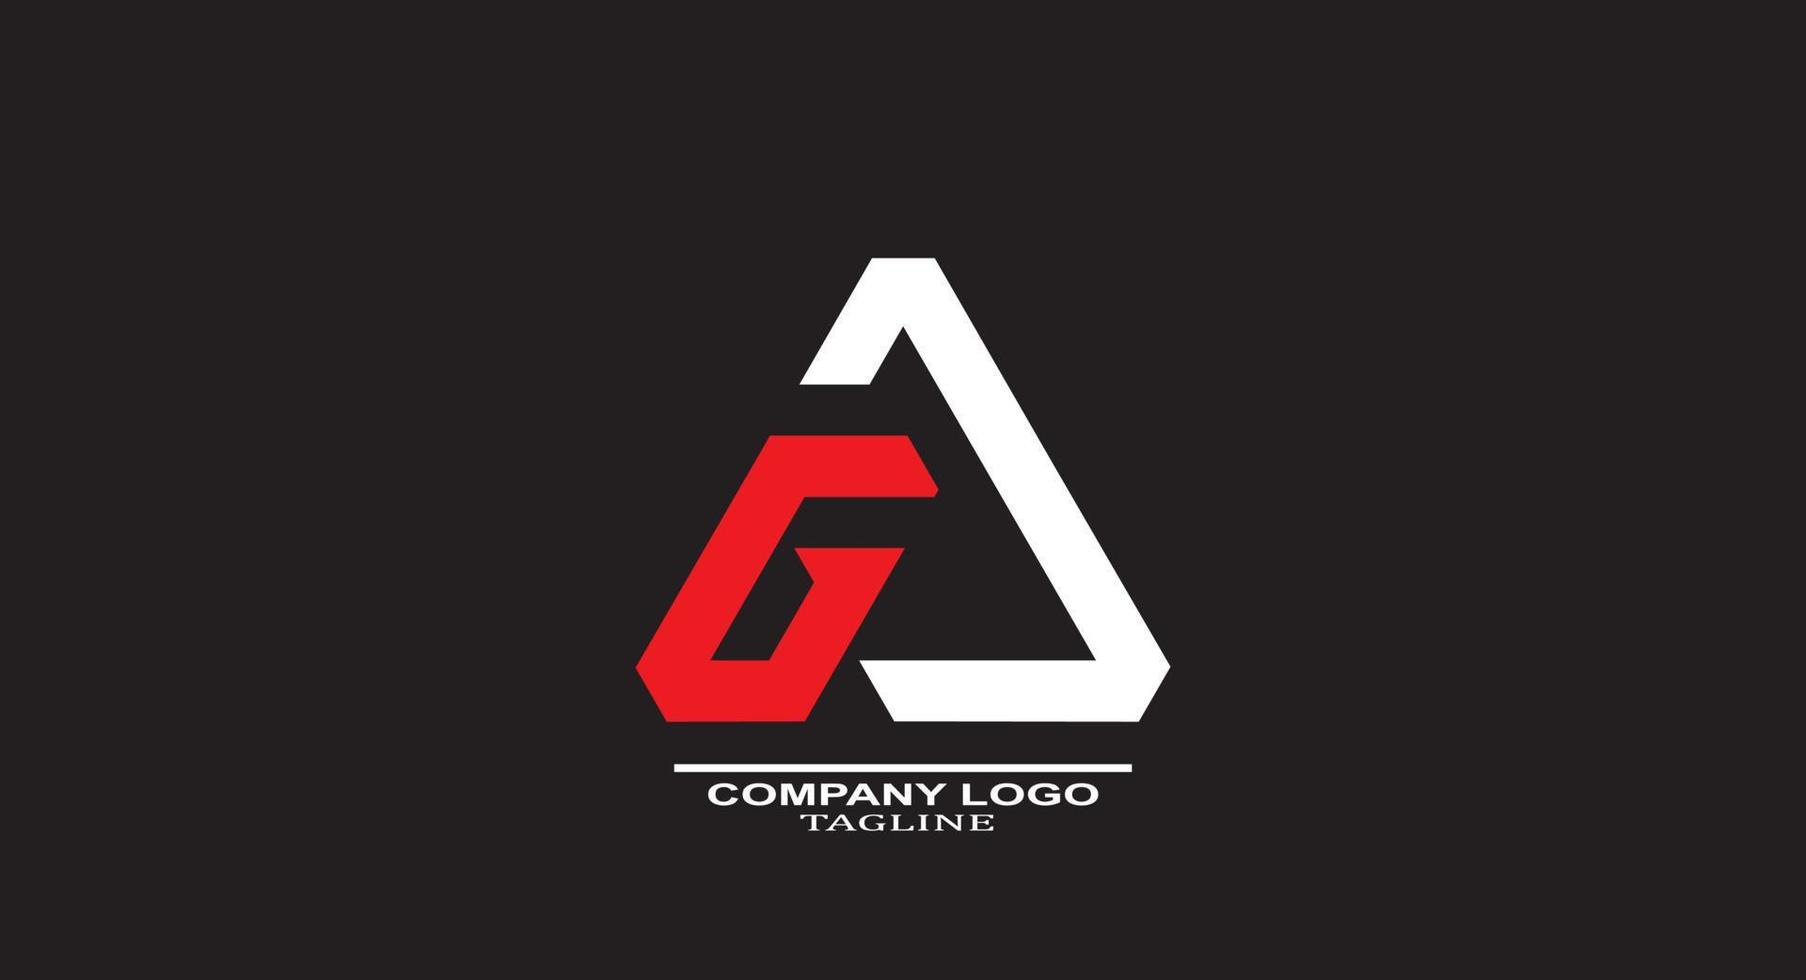 ga of ag logo ontwerp in driehoek vorm vector